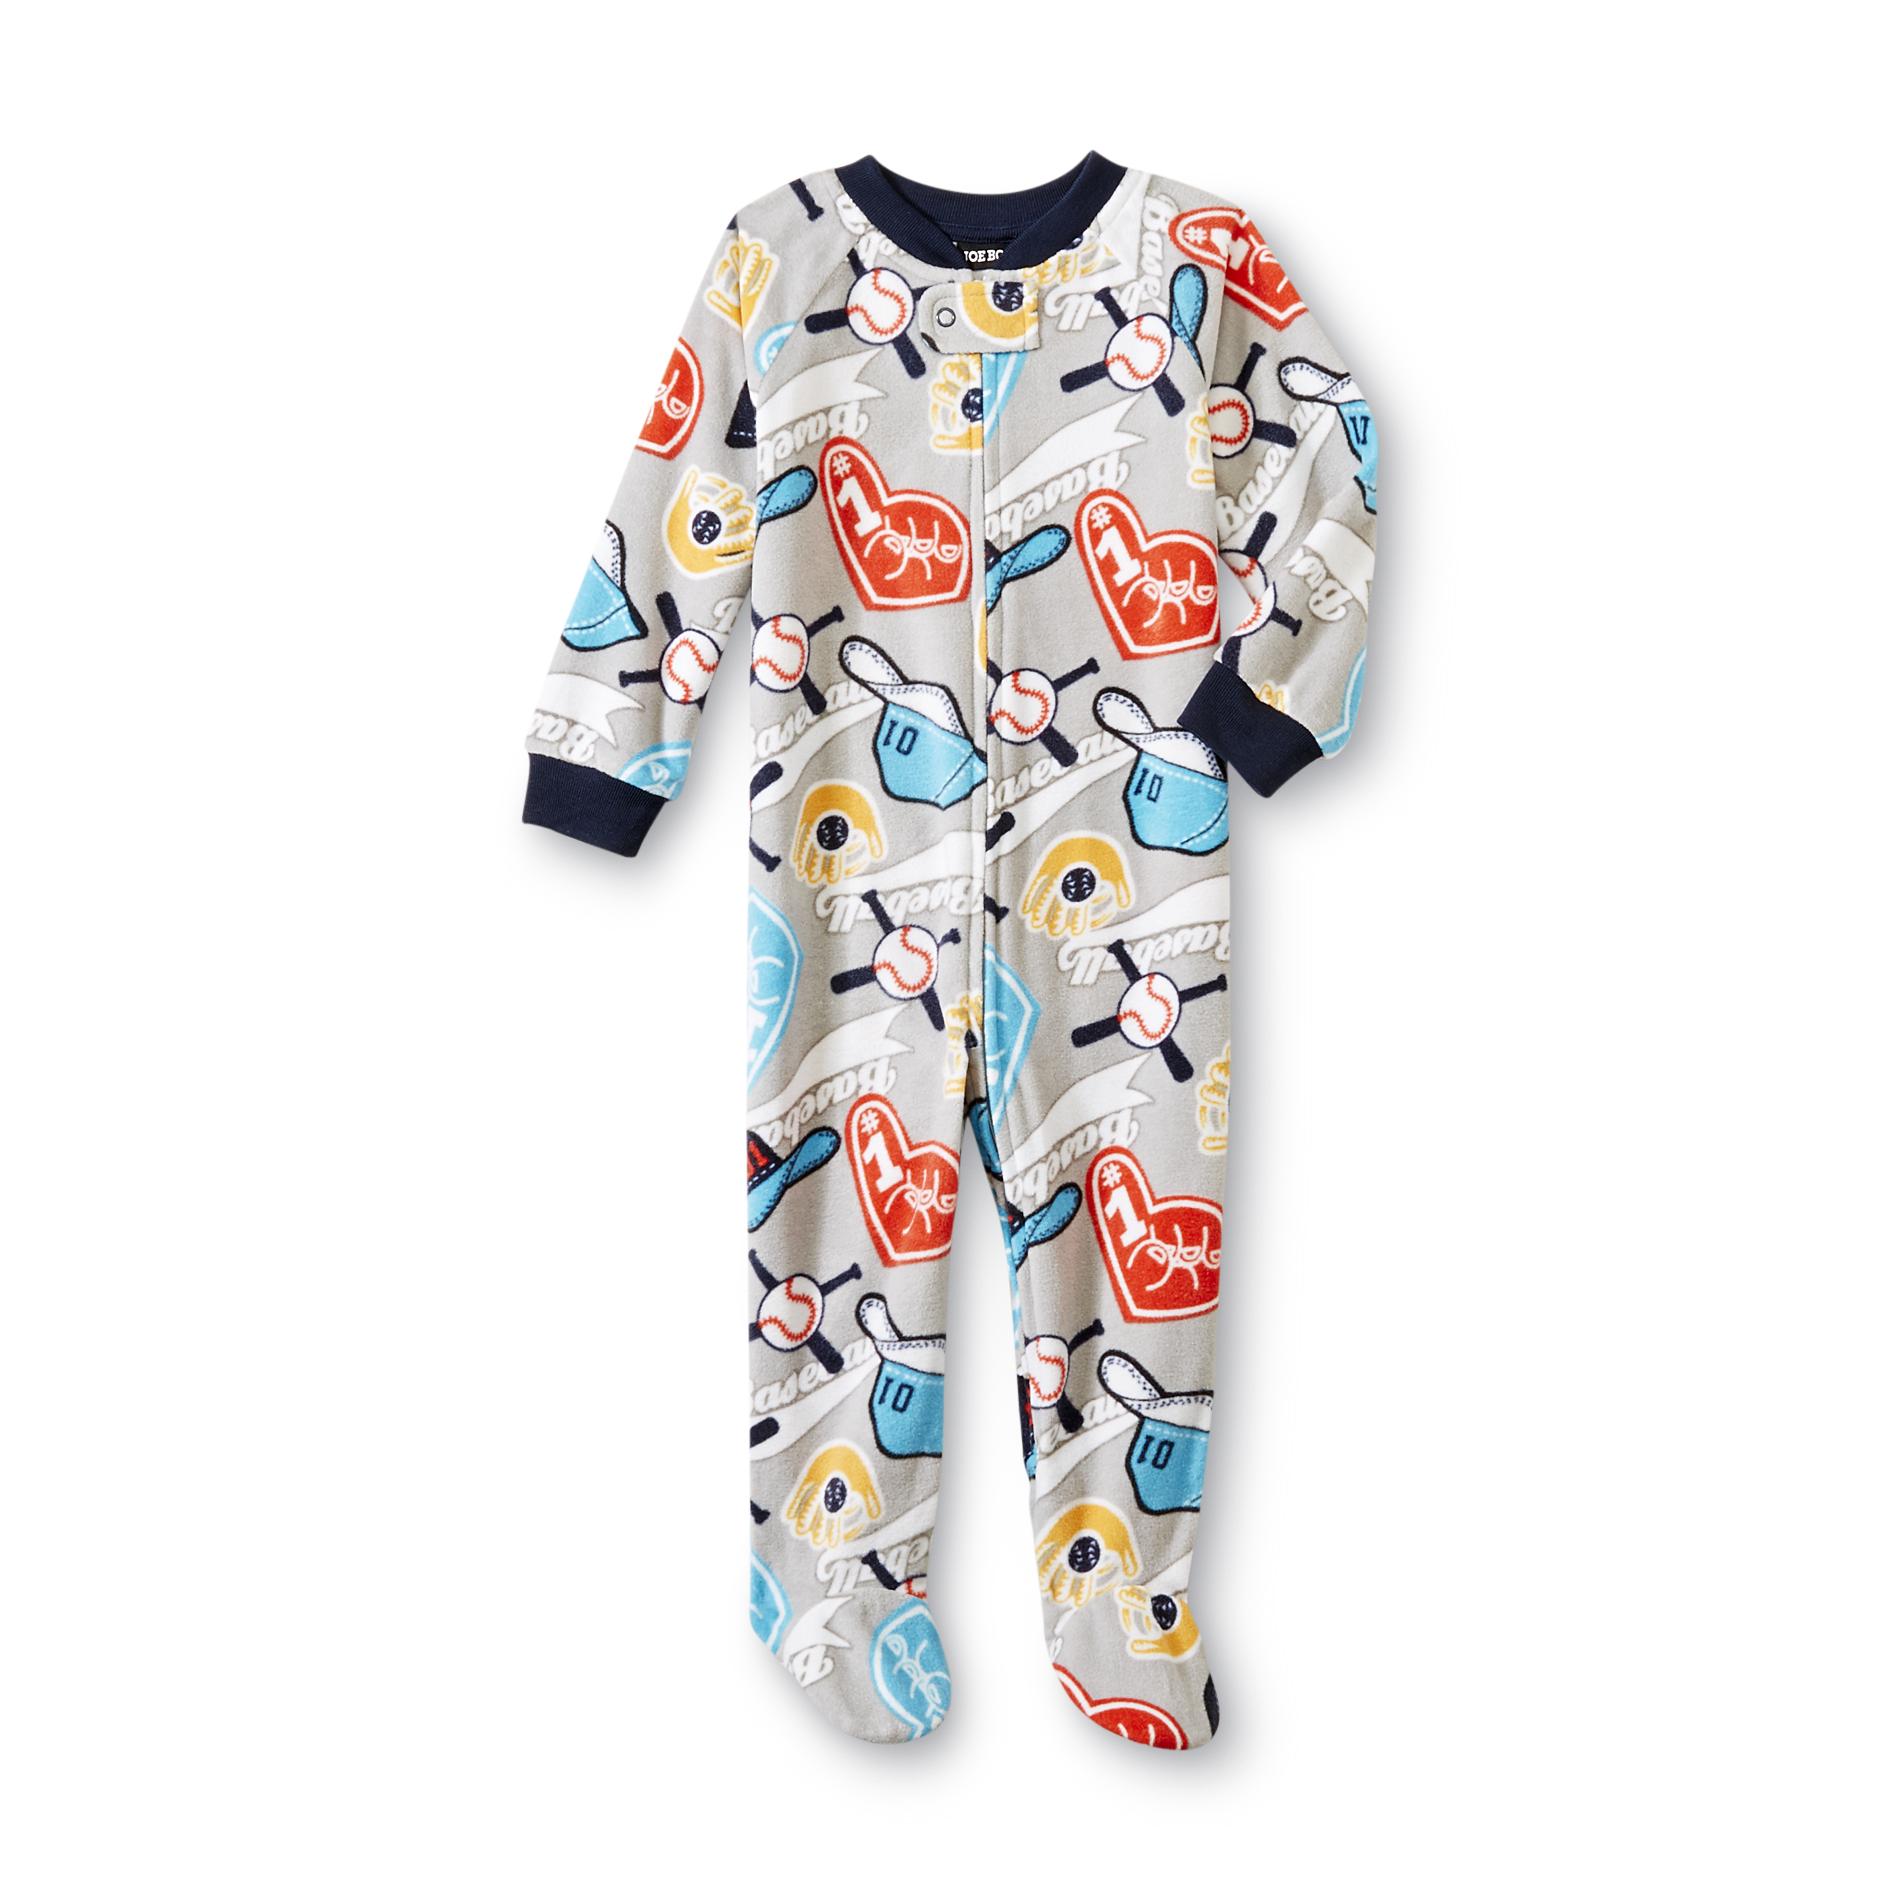 Joe Boxer Infant & Toddler Boy's Fleece Sleeper Pajamas - Baseball